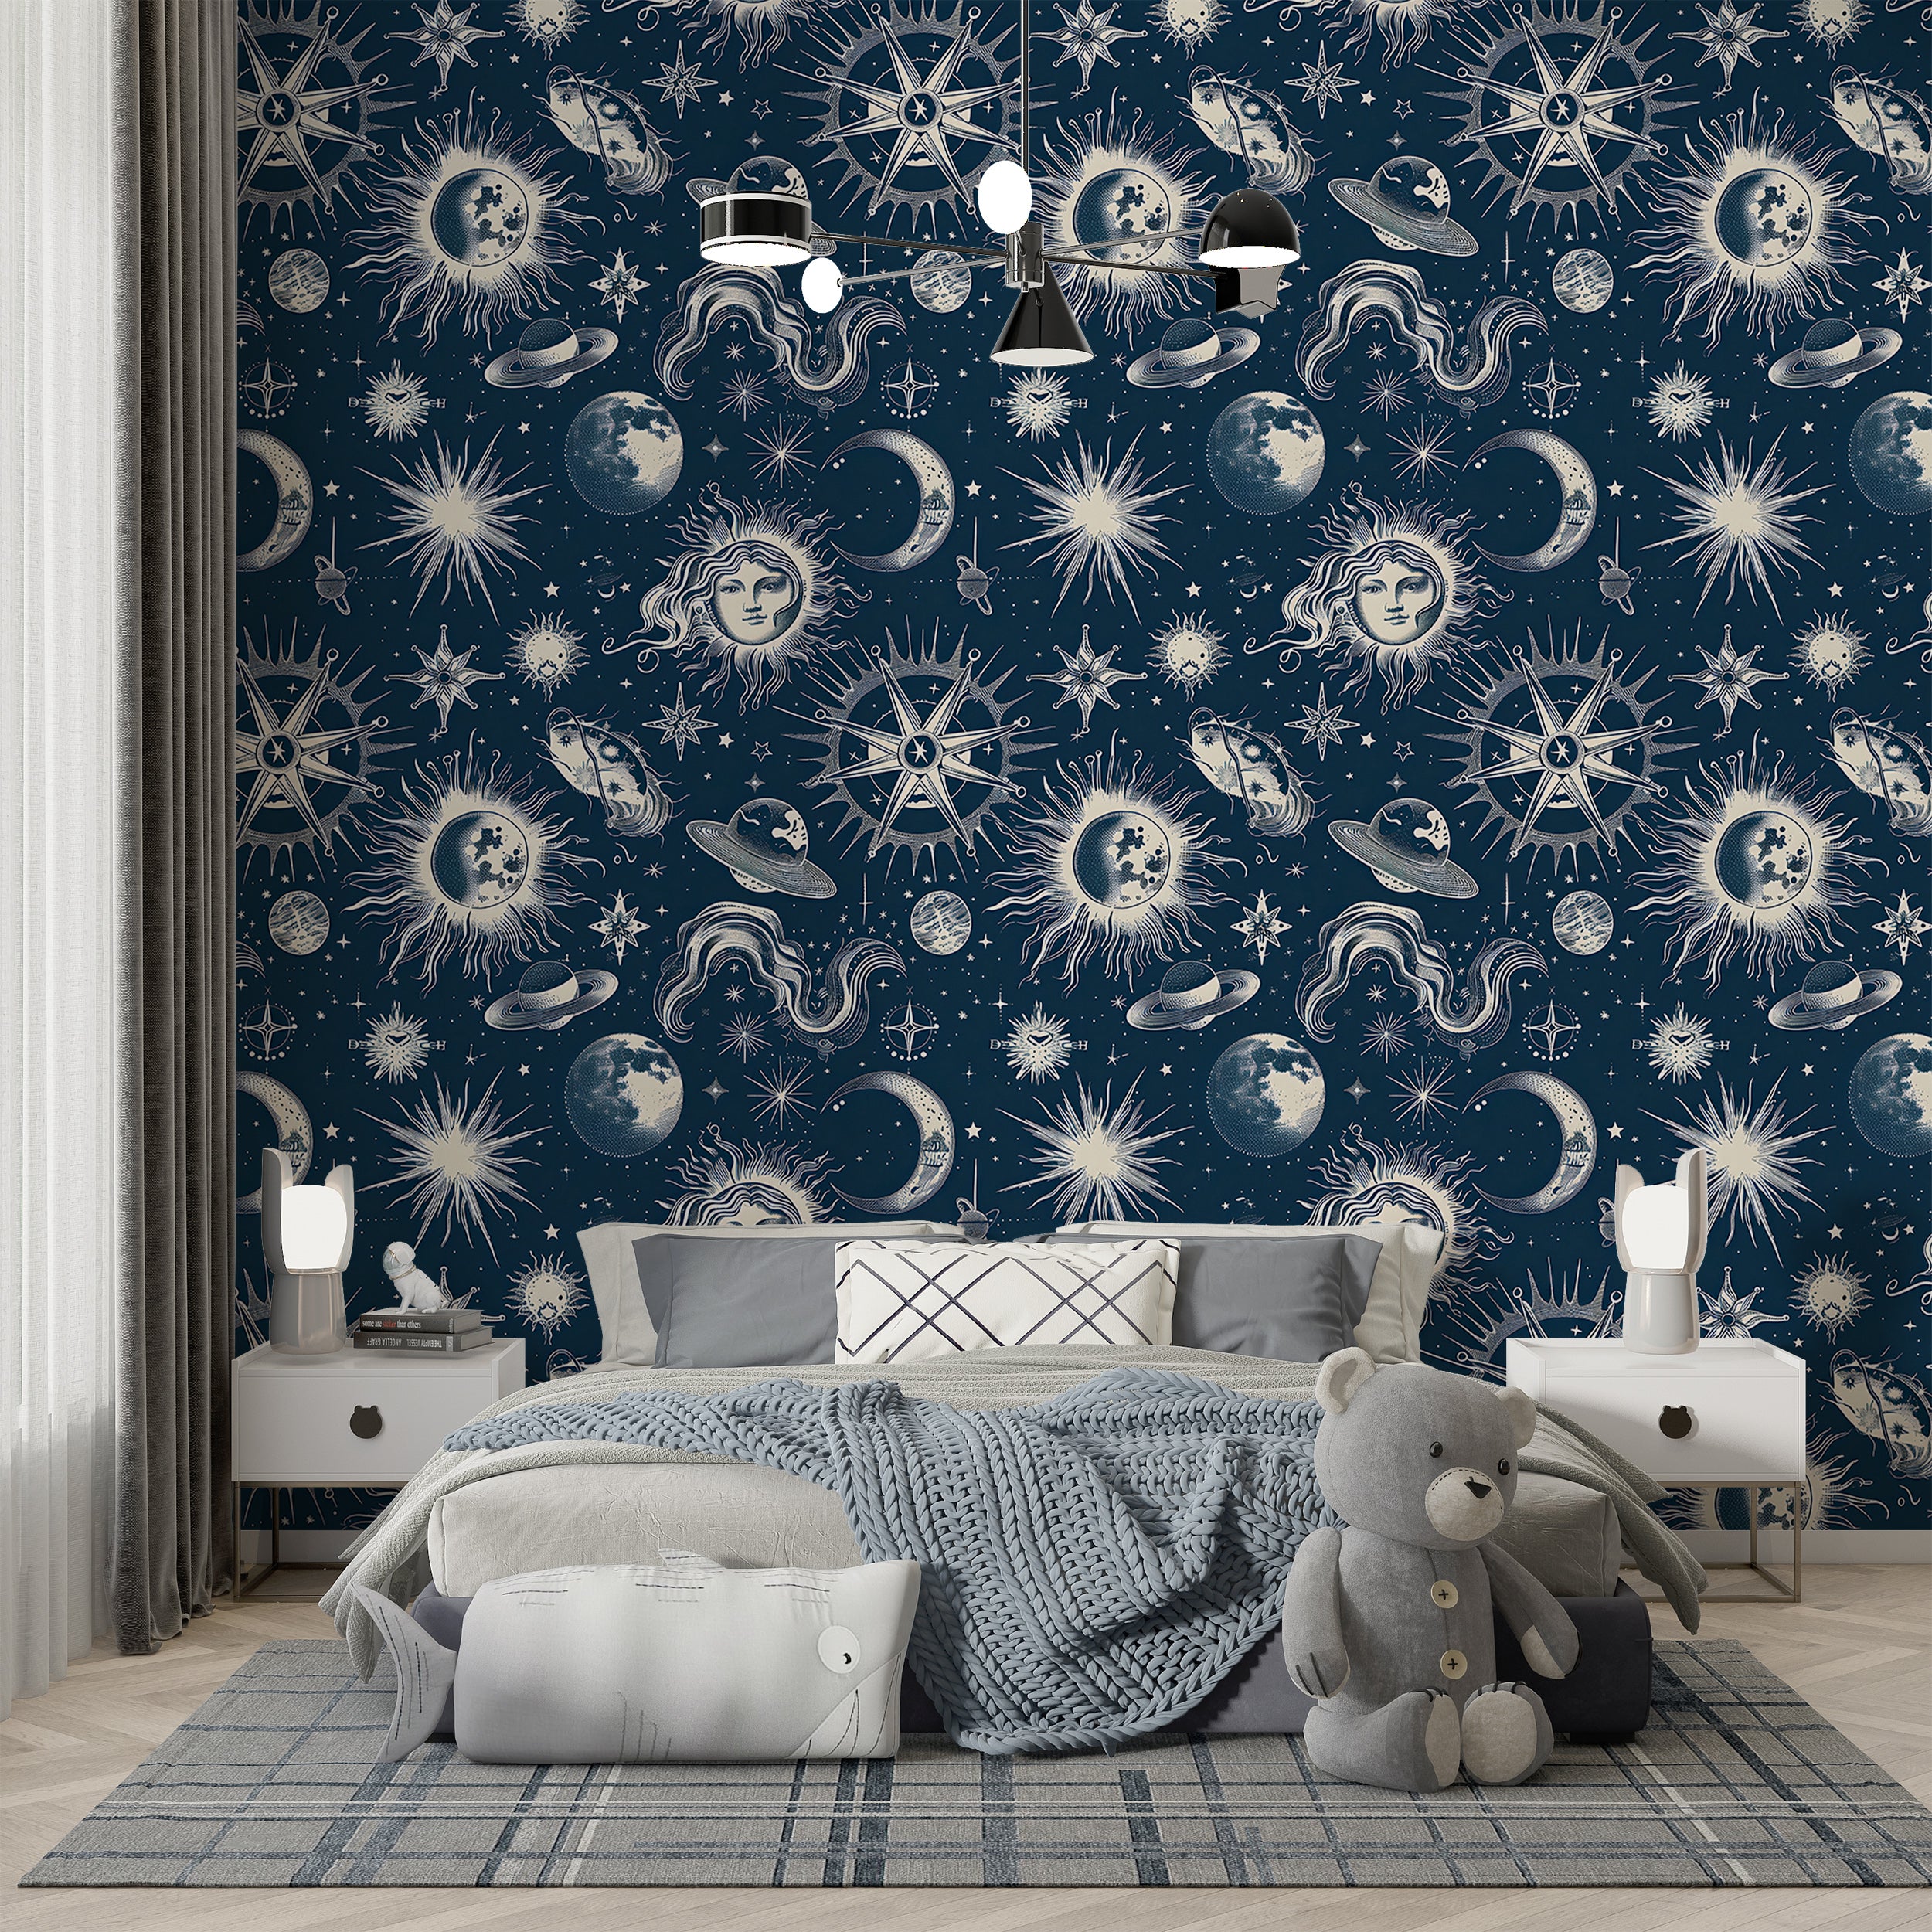 Dark blue space-themed wallpaper